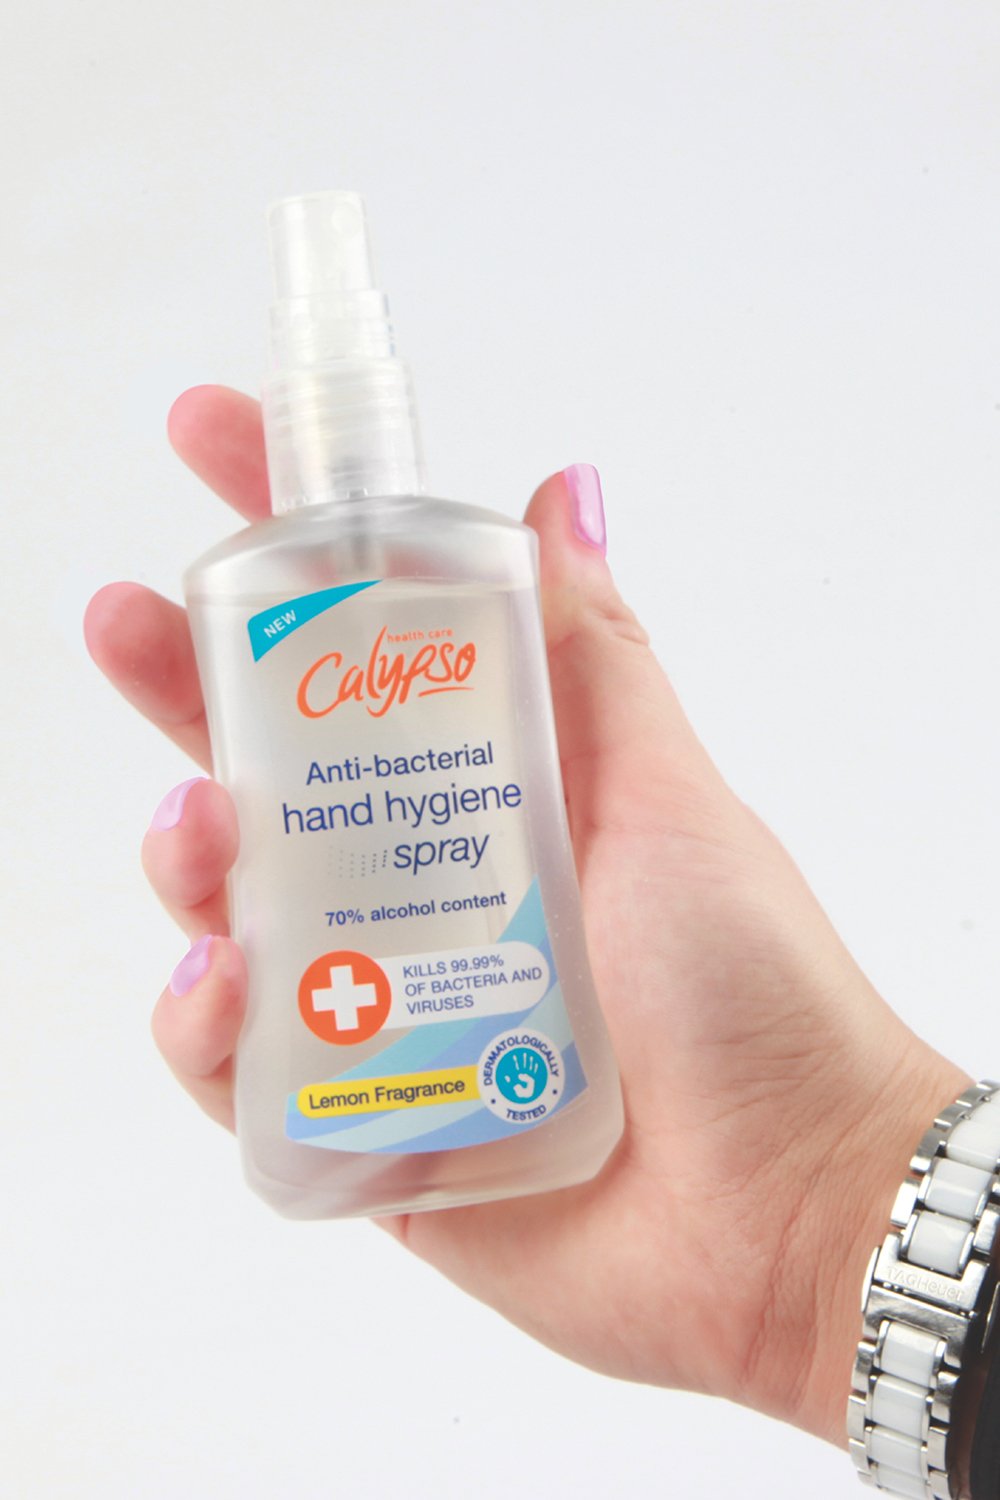 Calypso Hand Hygiene Spray in hand